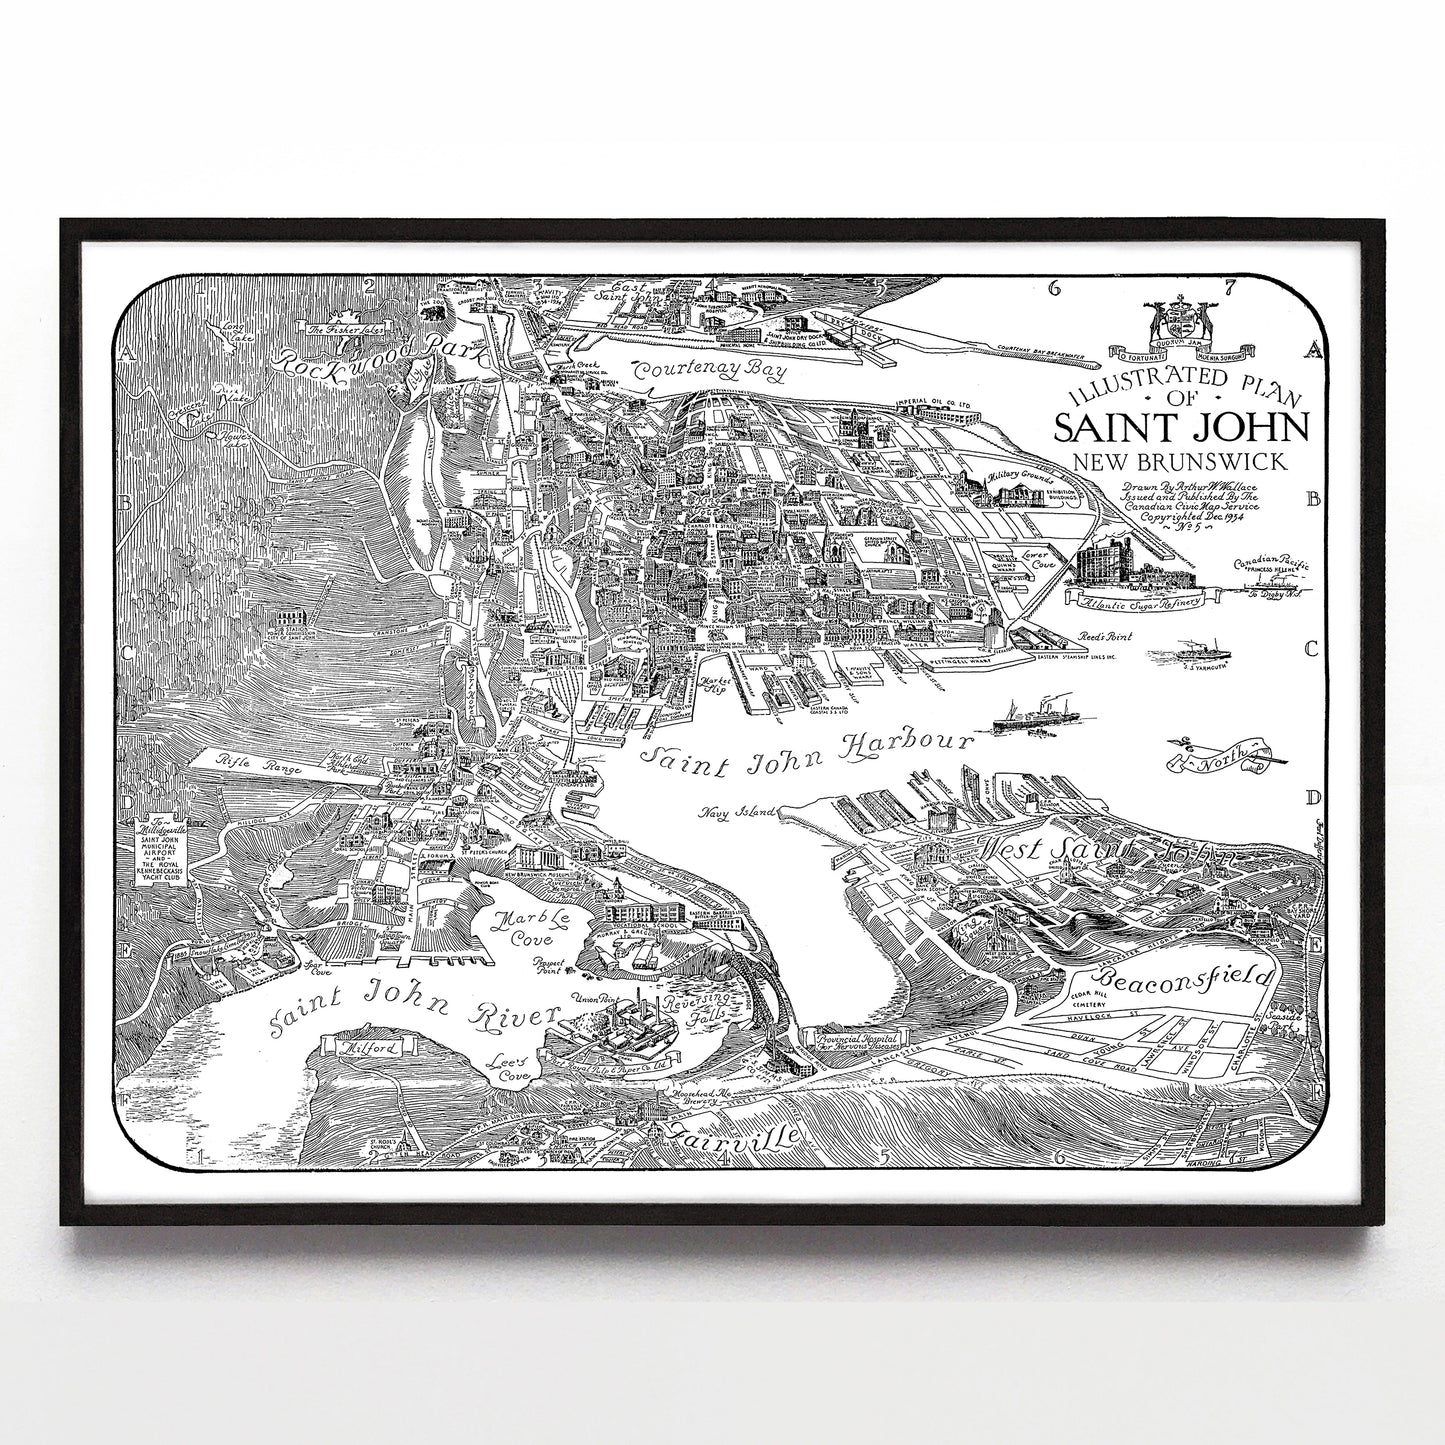 “Illustrated Plan of Saint John New Brunswick” print by Arthur W. Wallace (1934)